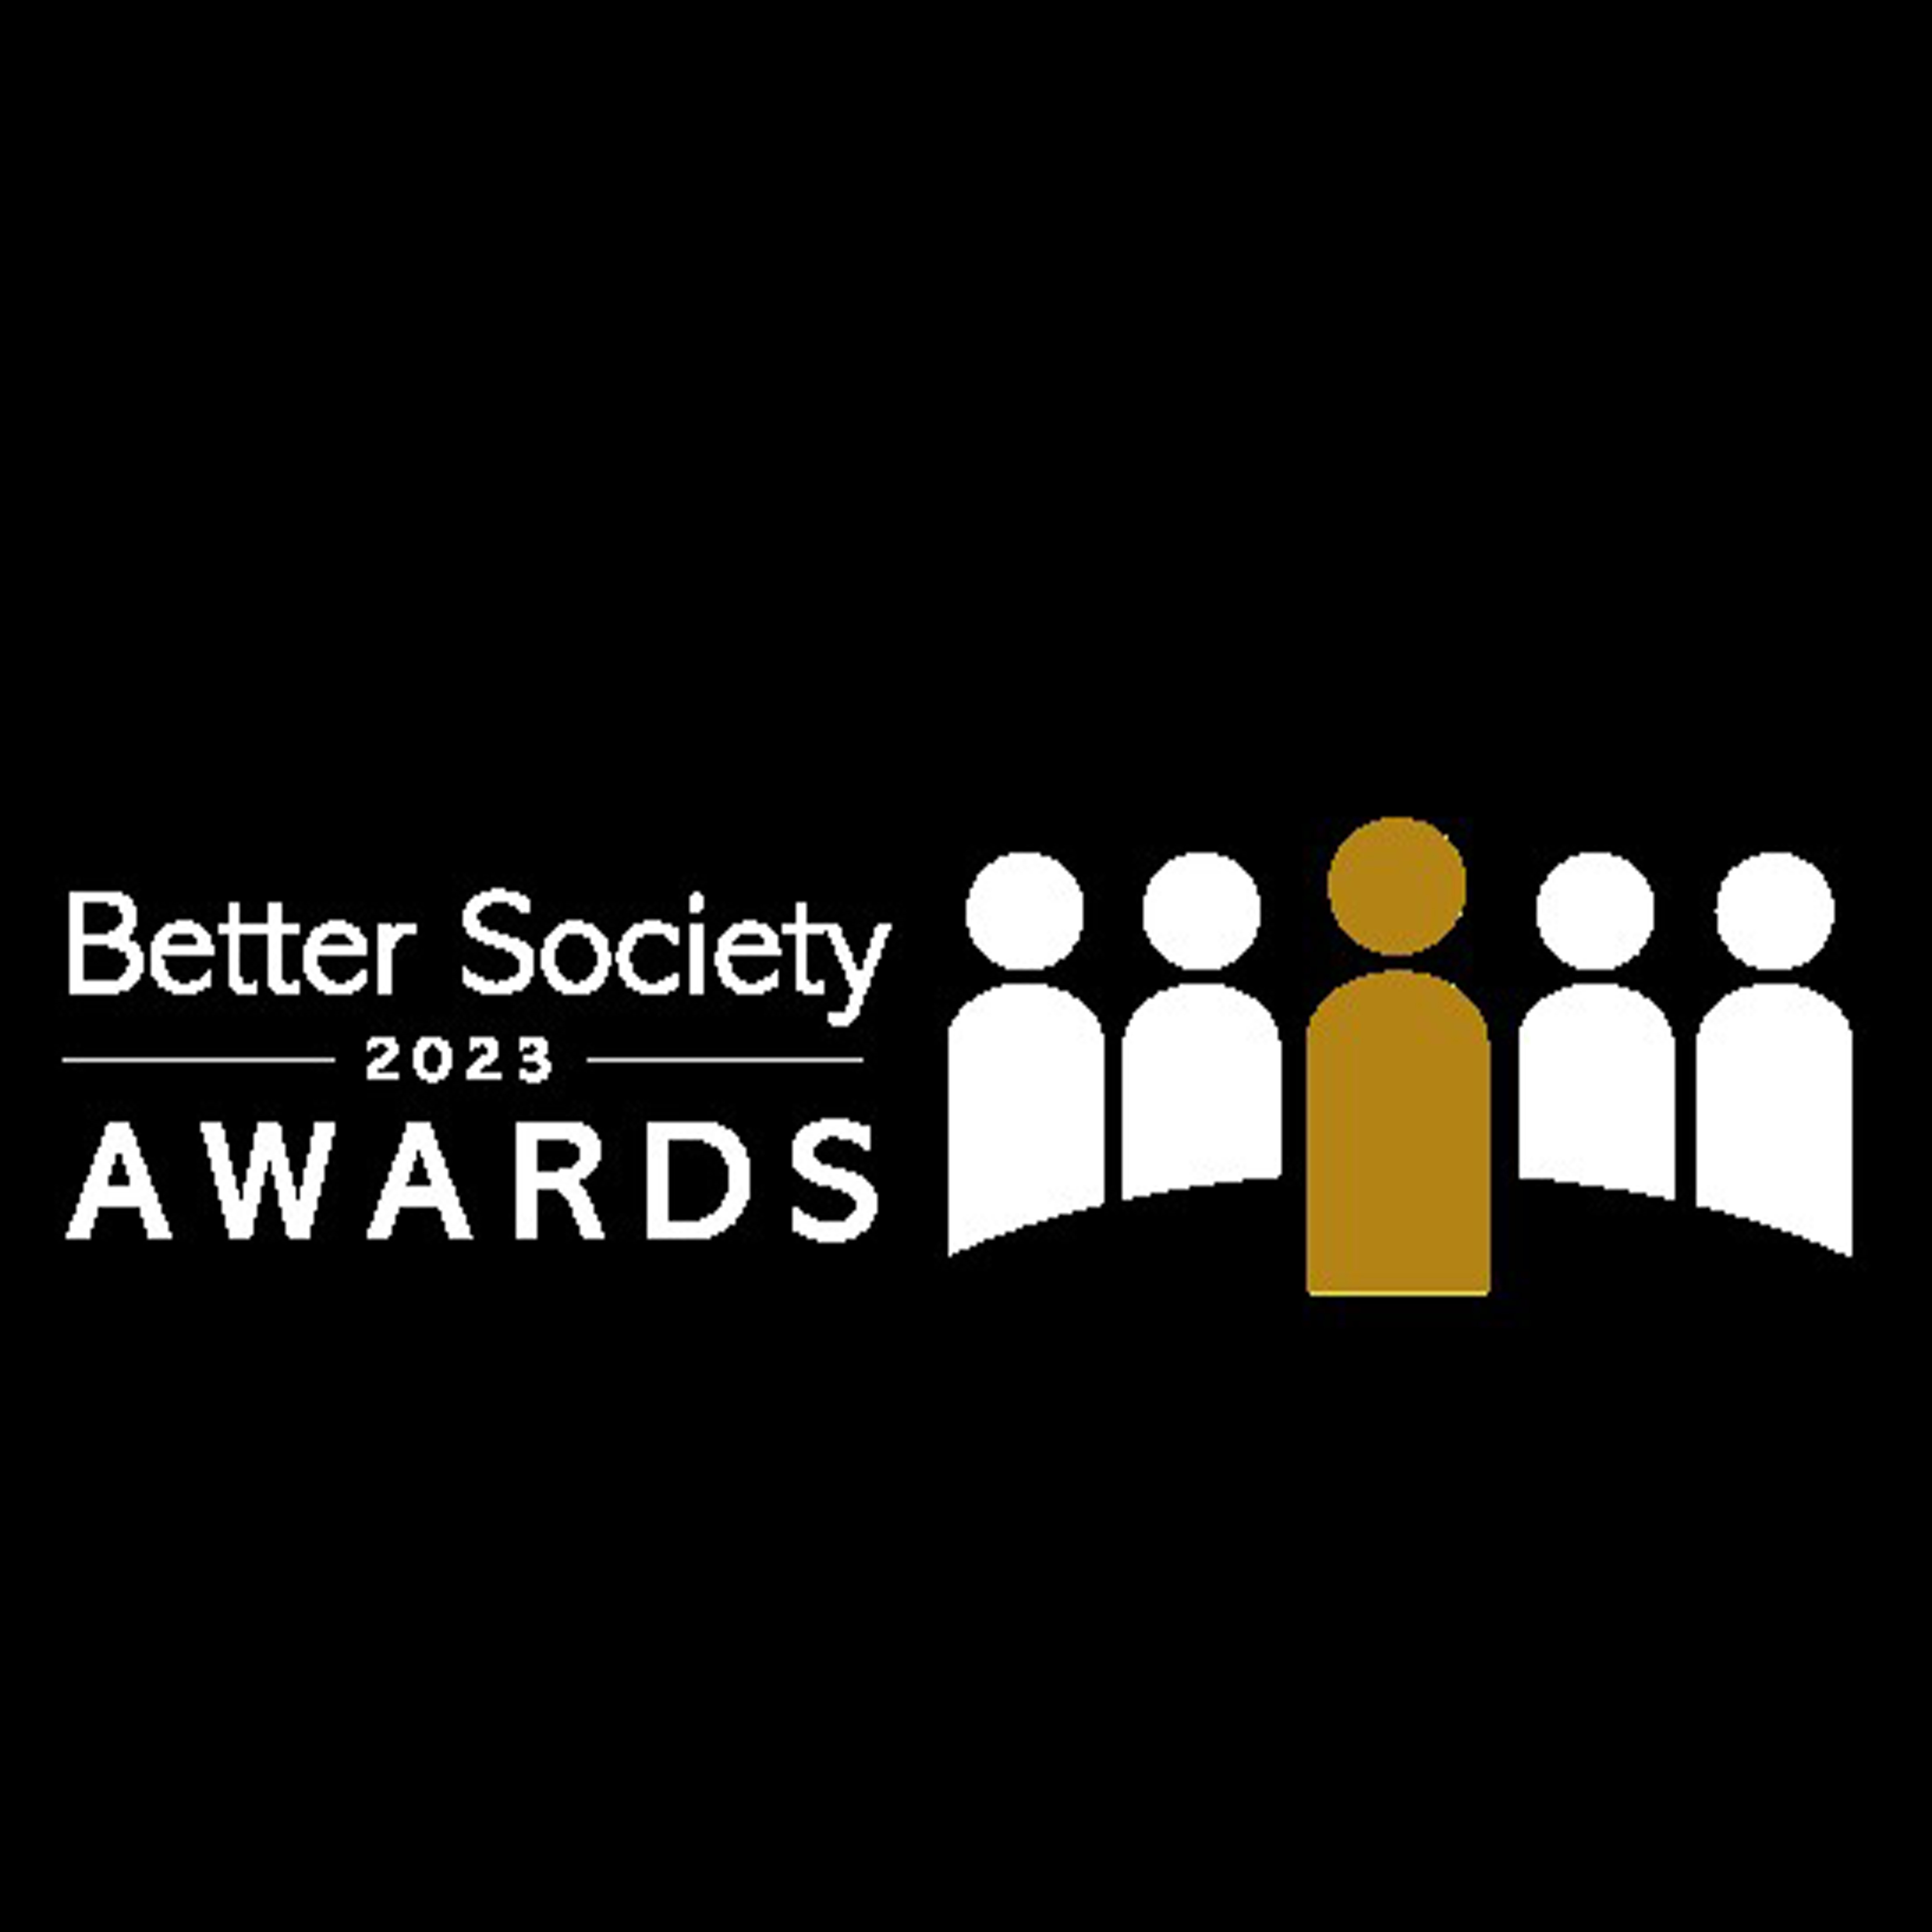 Better Society Awards 2023 logo